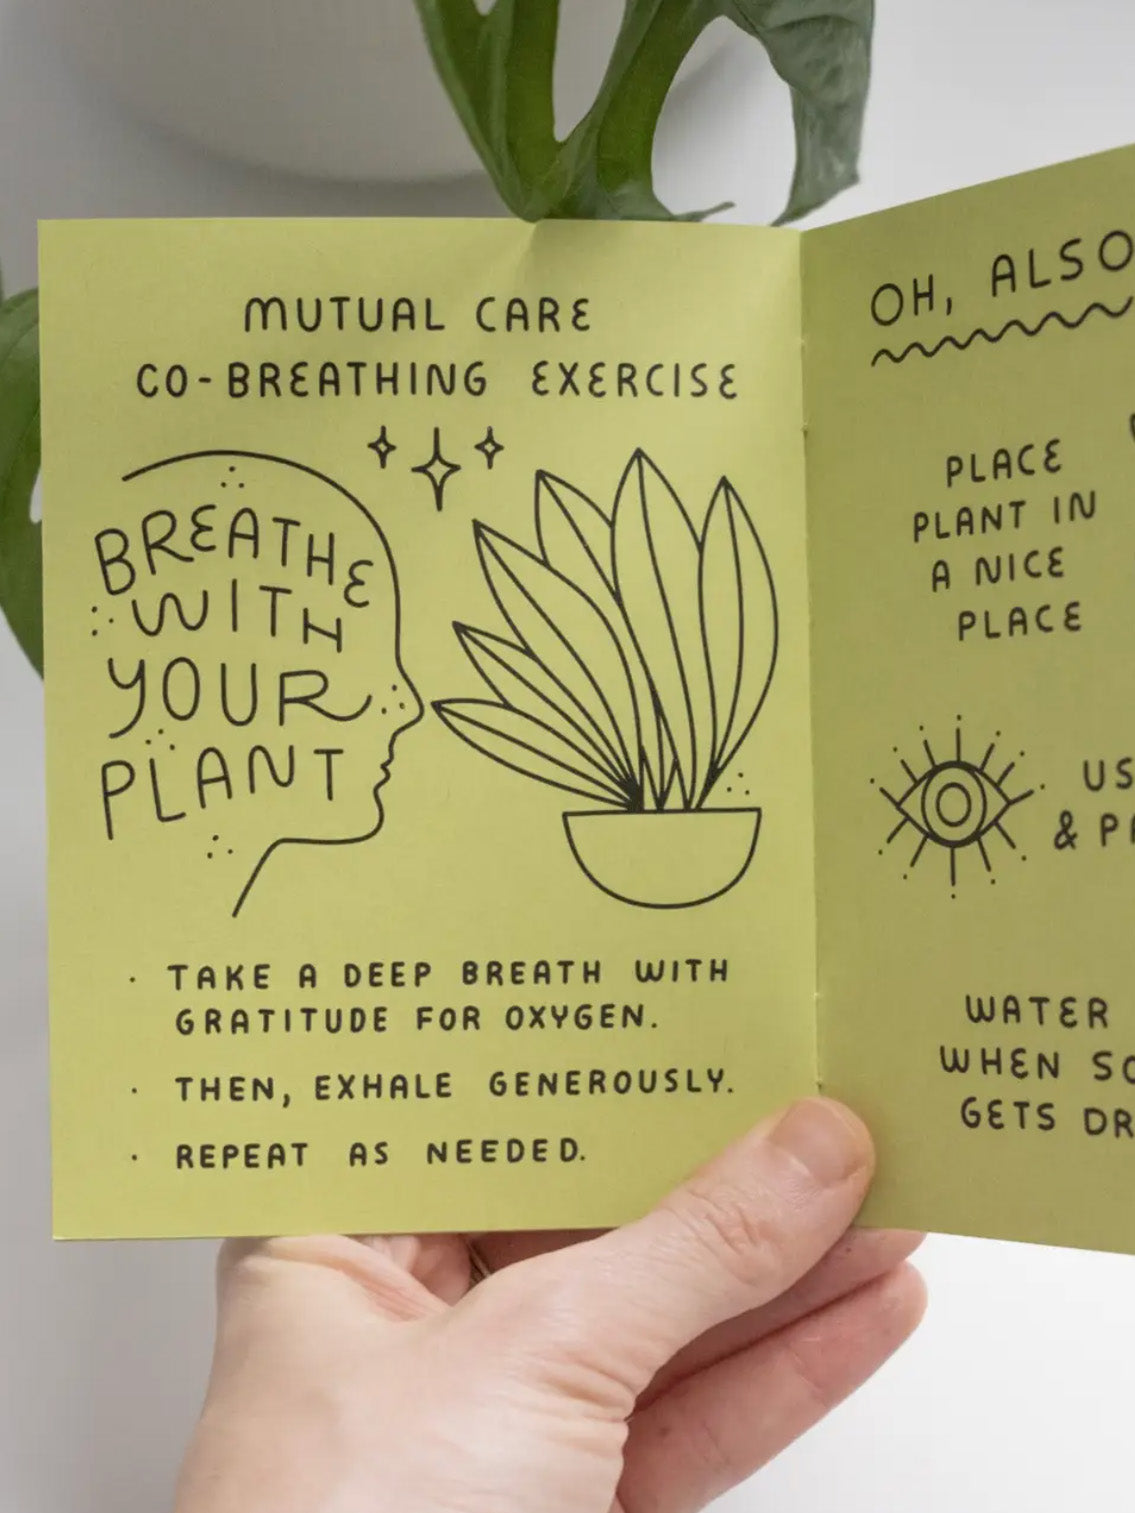 how to keep a plant alive zine